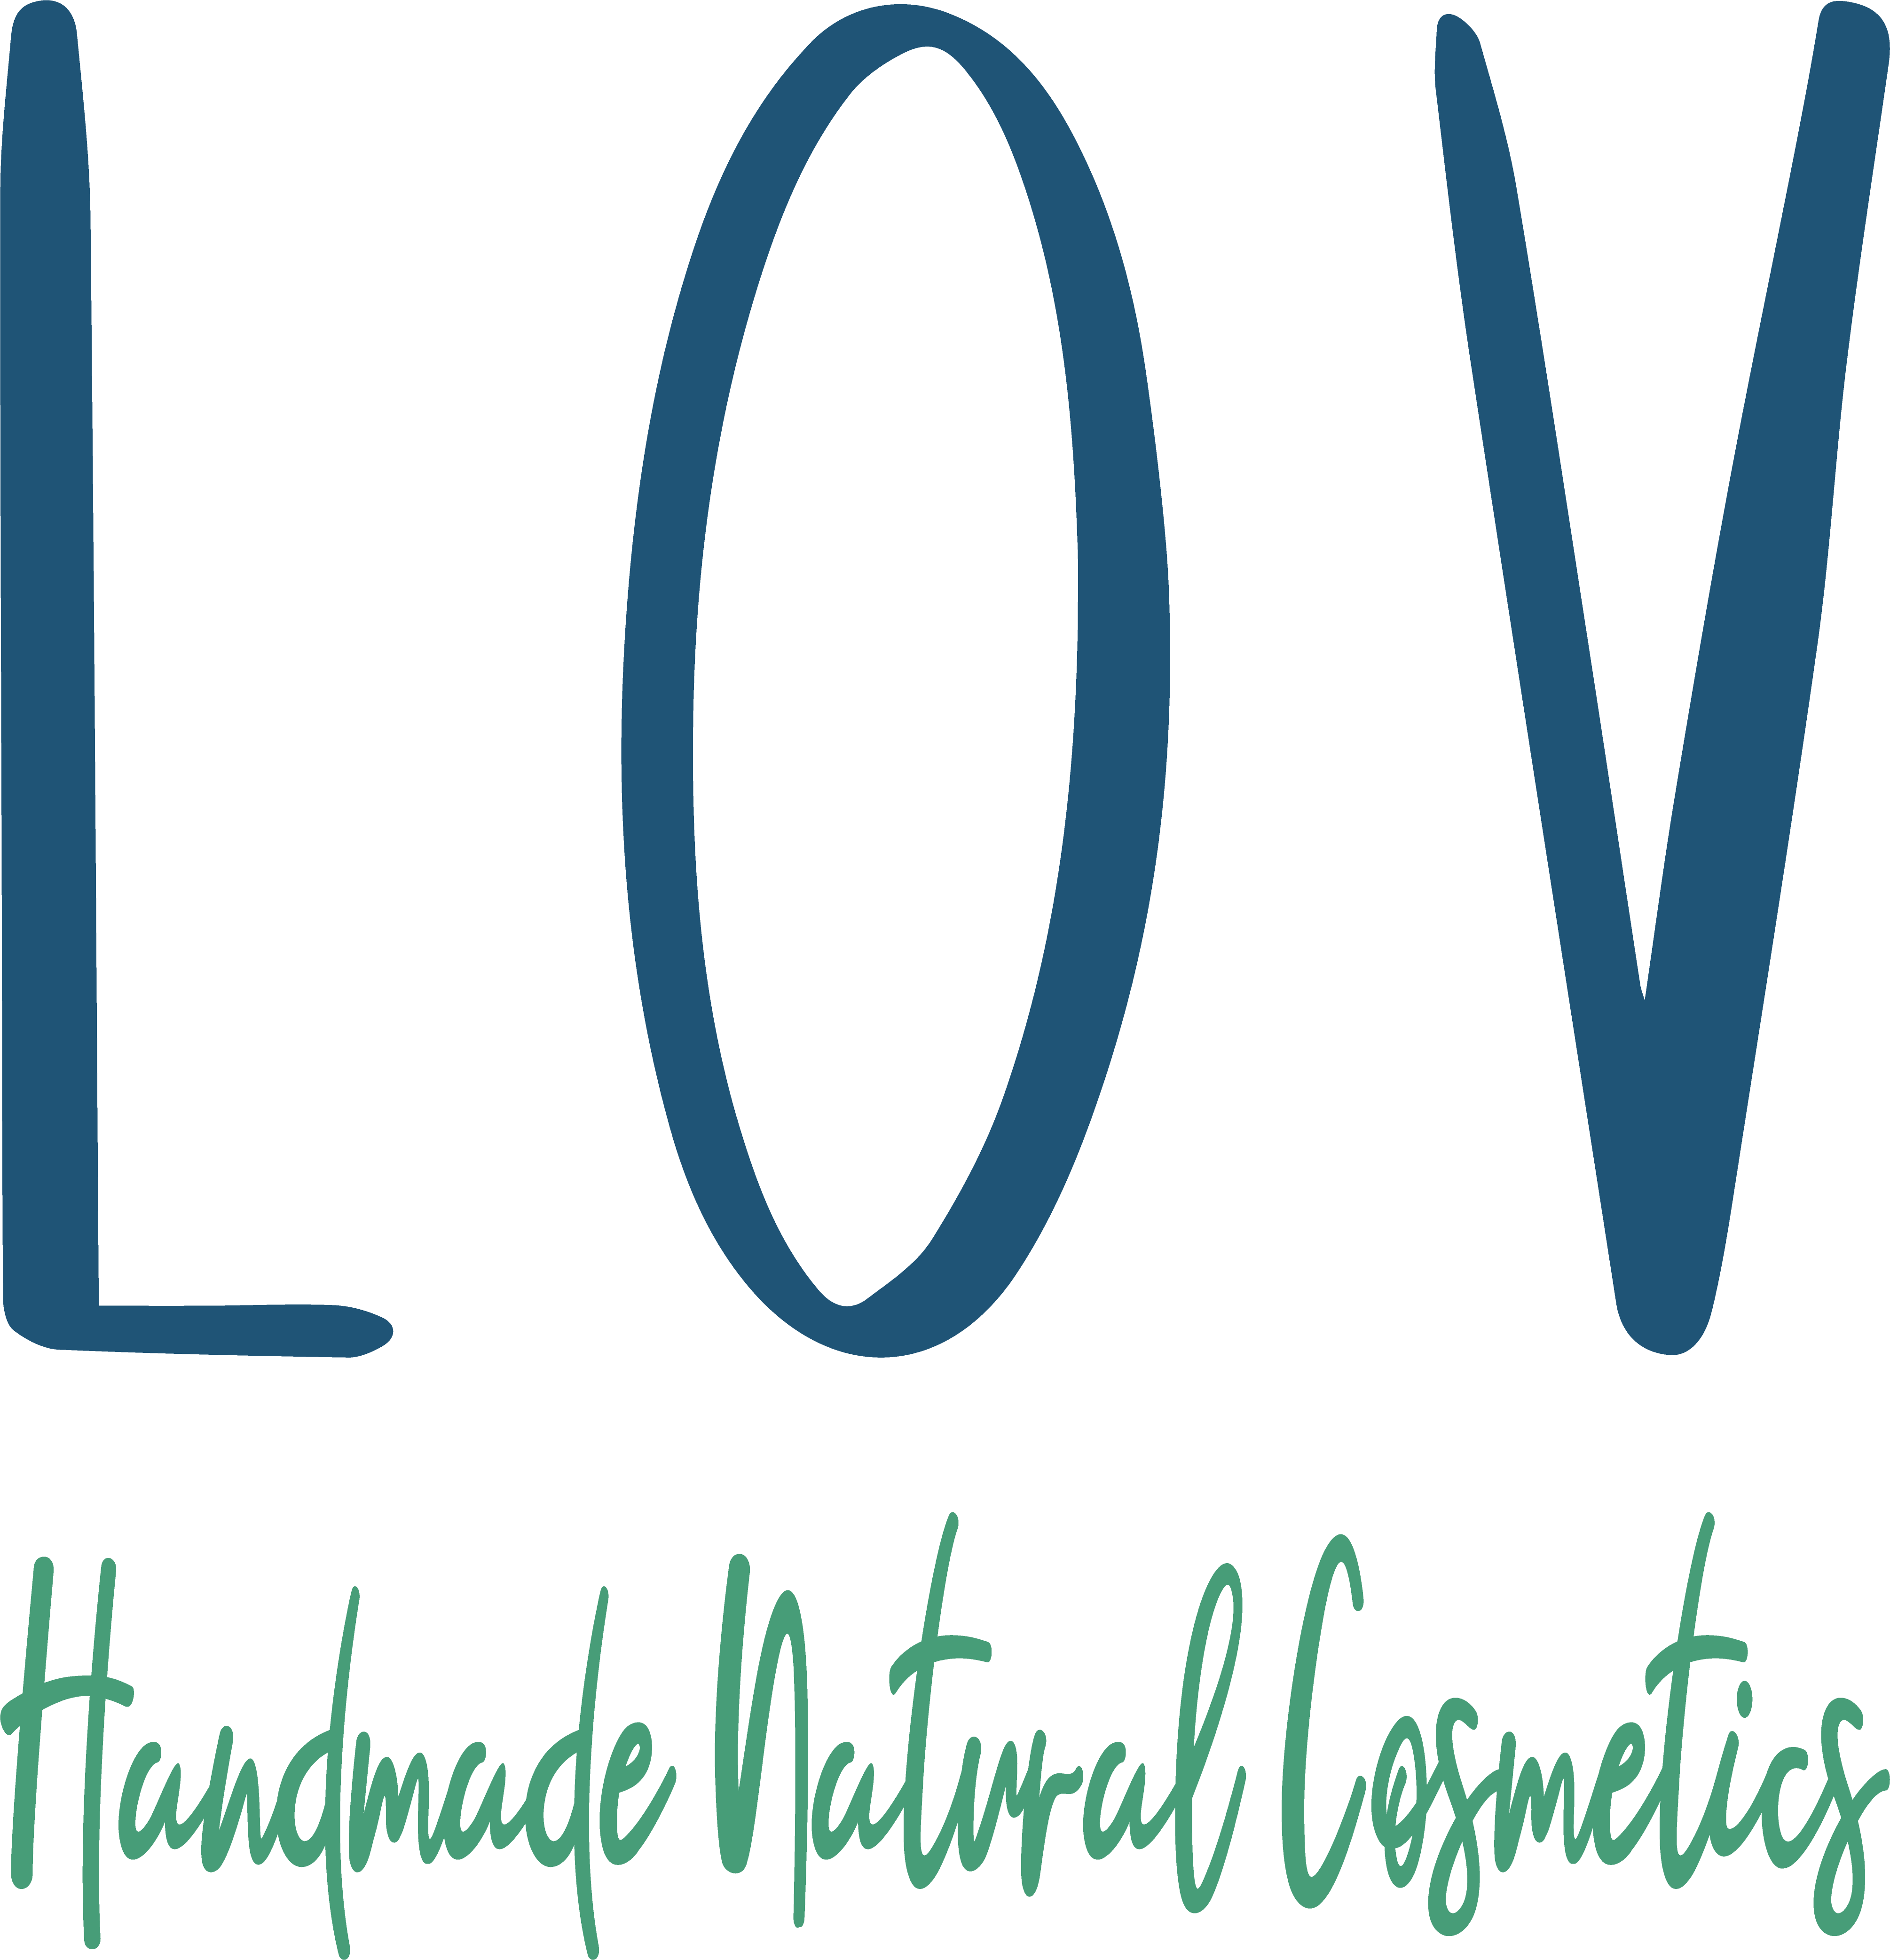 LOV - Handmade Natural Cosmetic